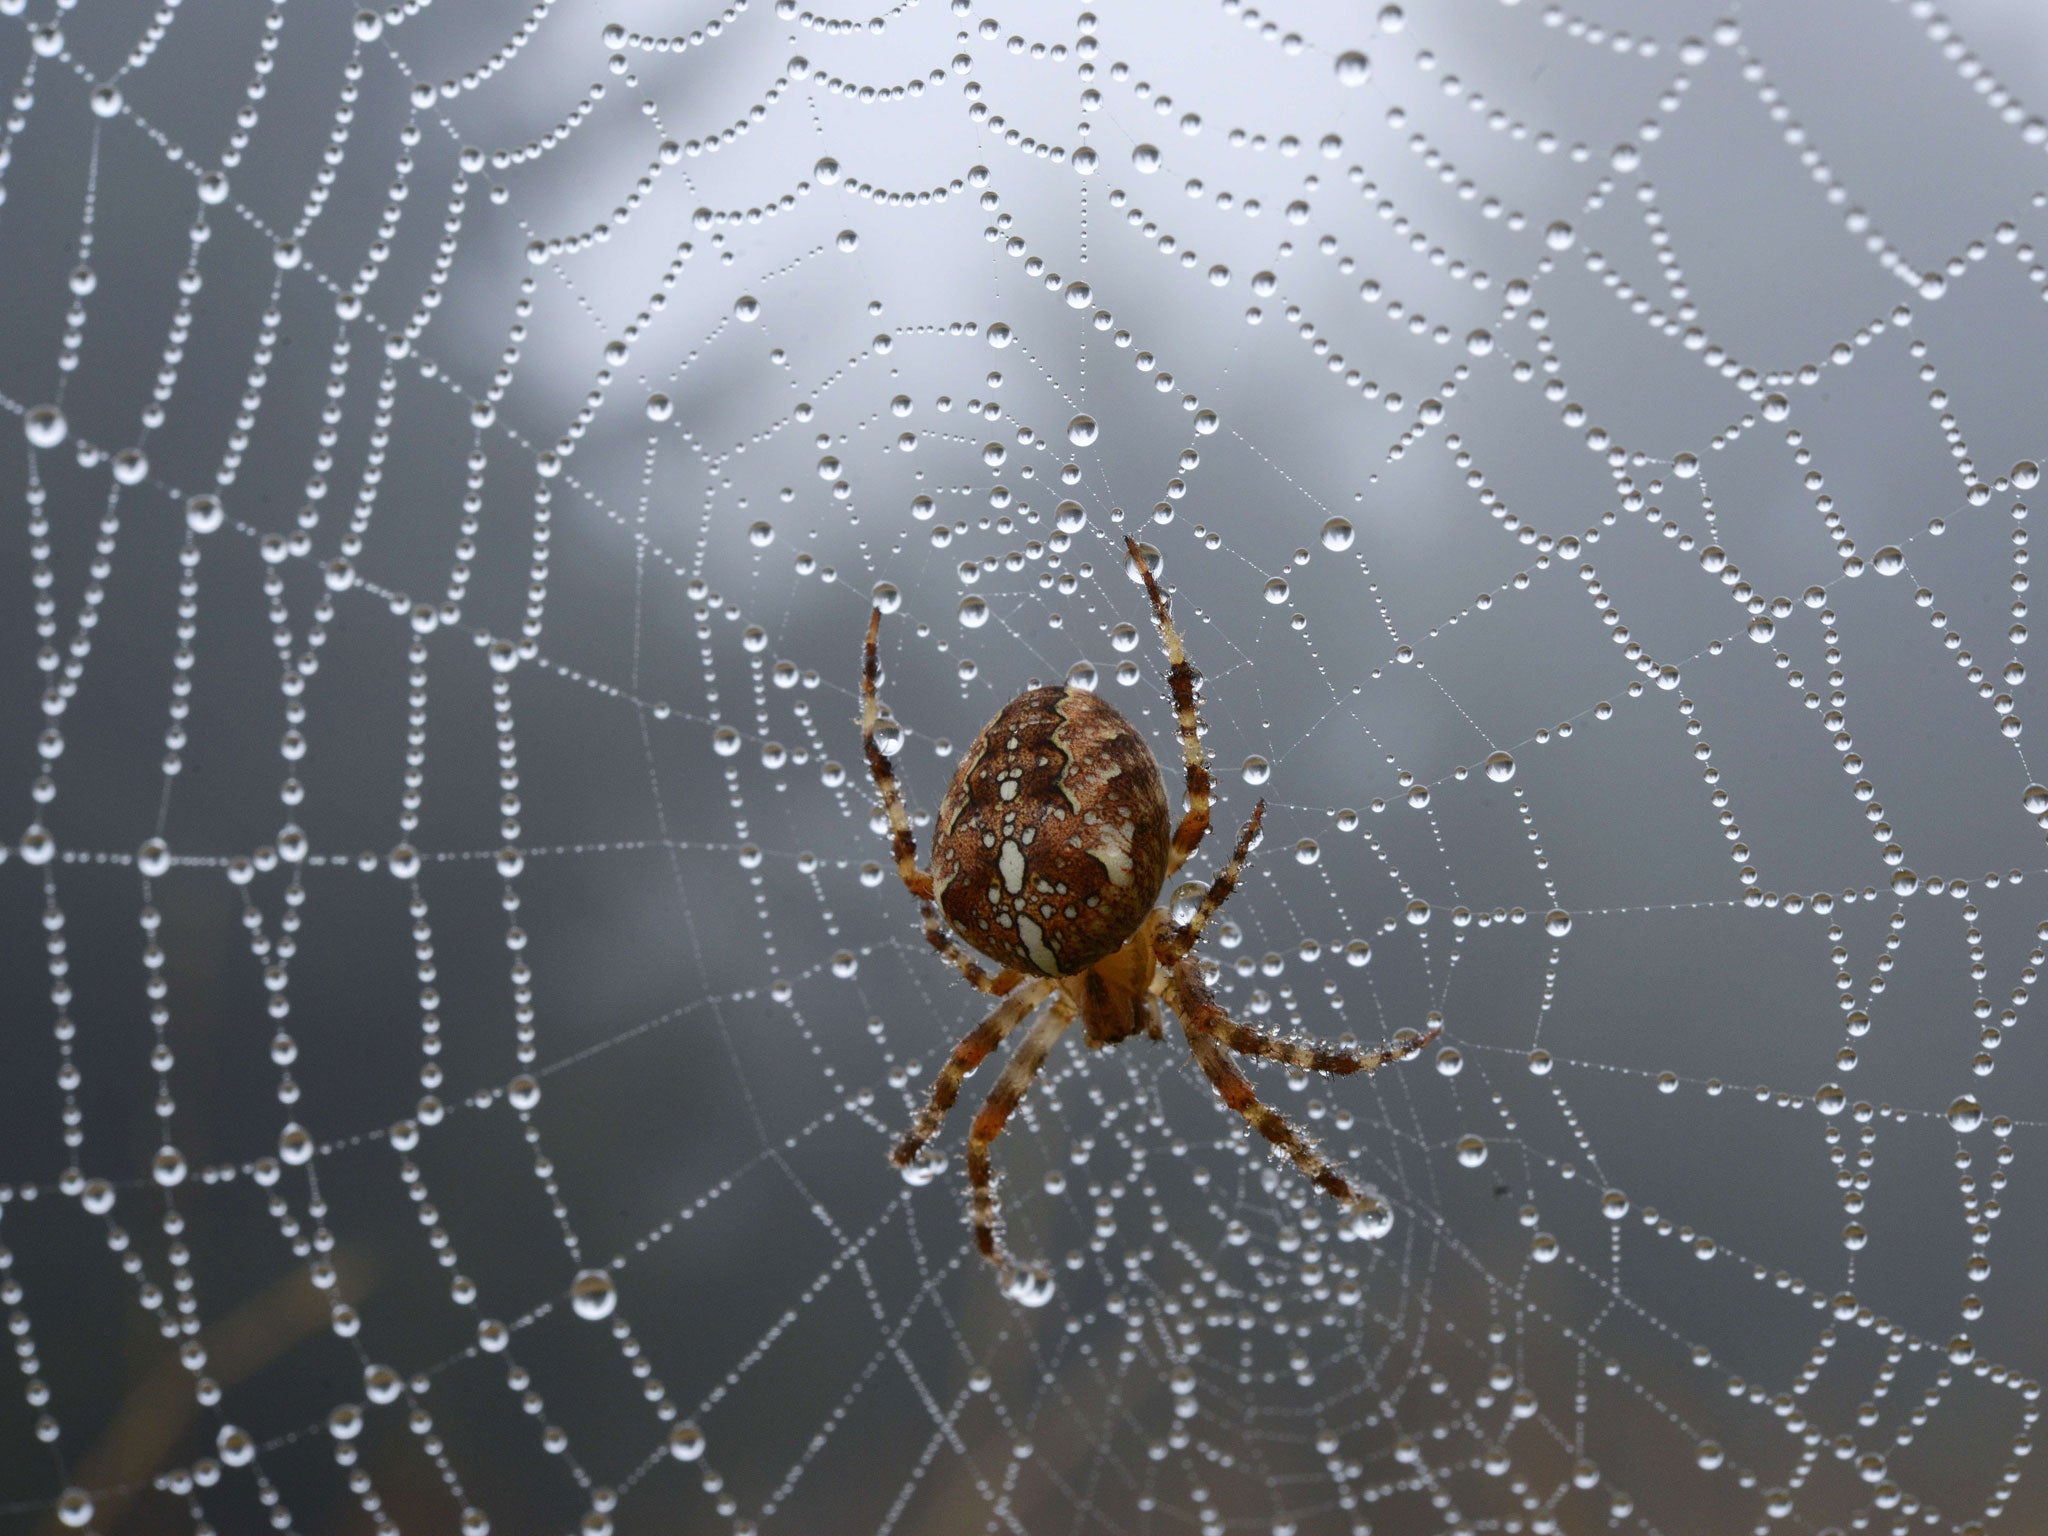 Baba Del Diablo Huge Gooey Spider Webs Cover Rural Argentina Following Floods The Independent